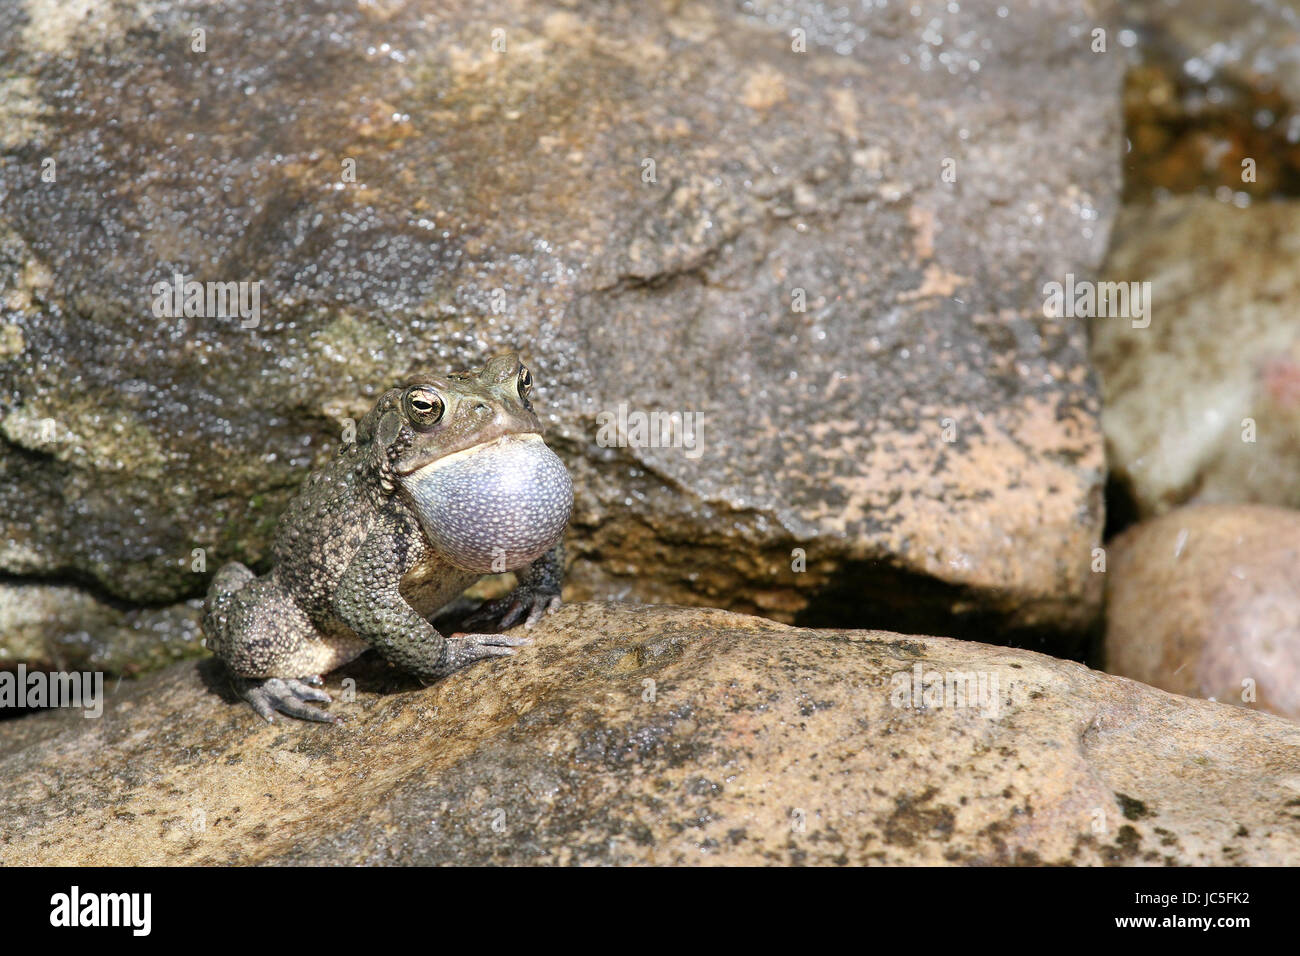 American toad at backyard pond Stock Photo